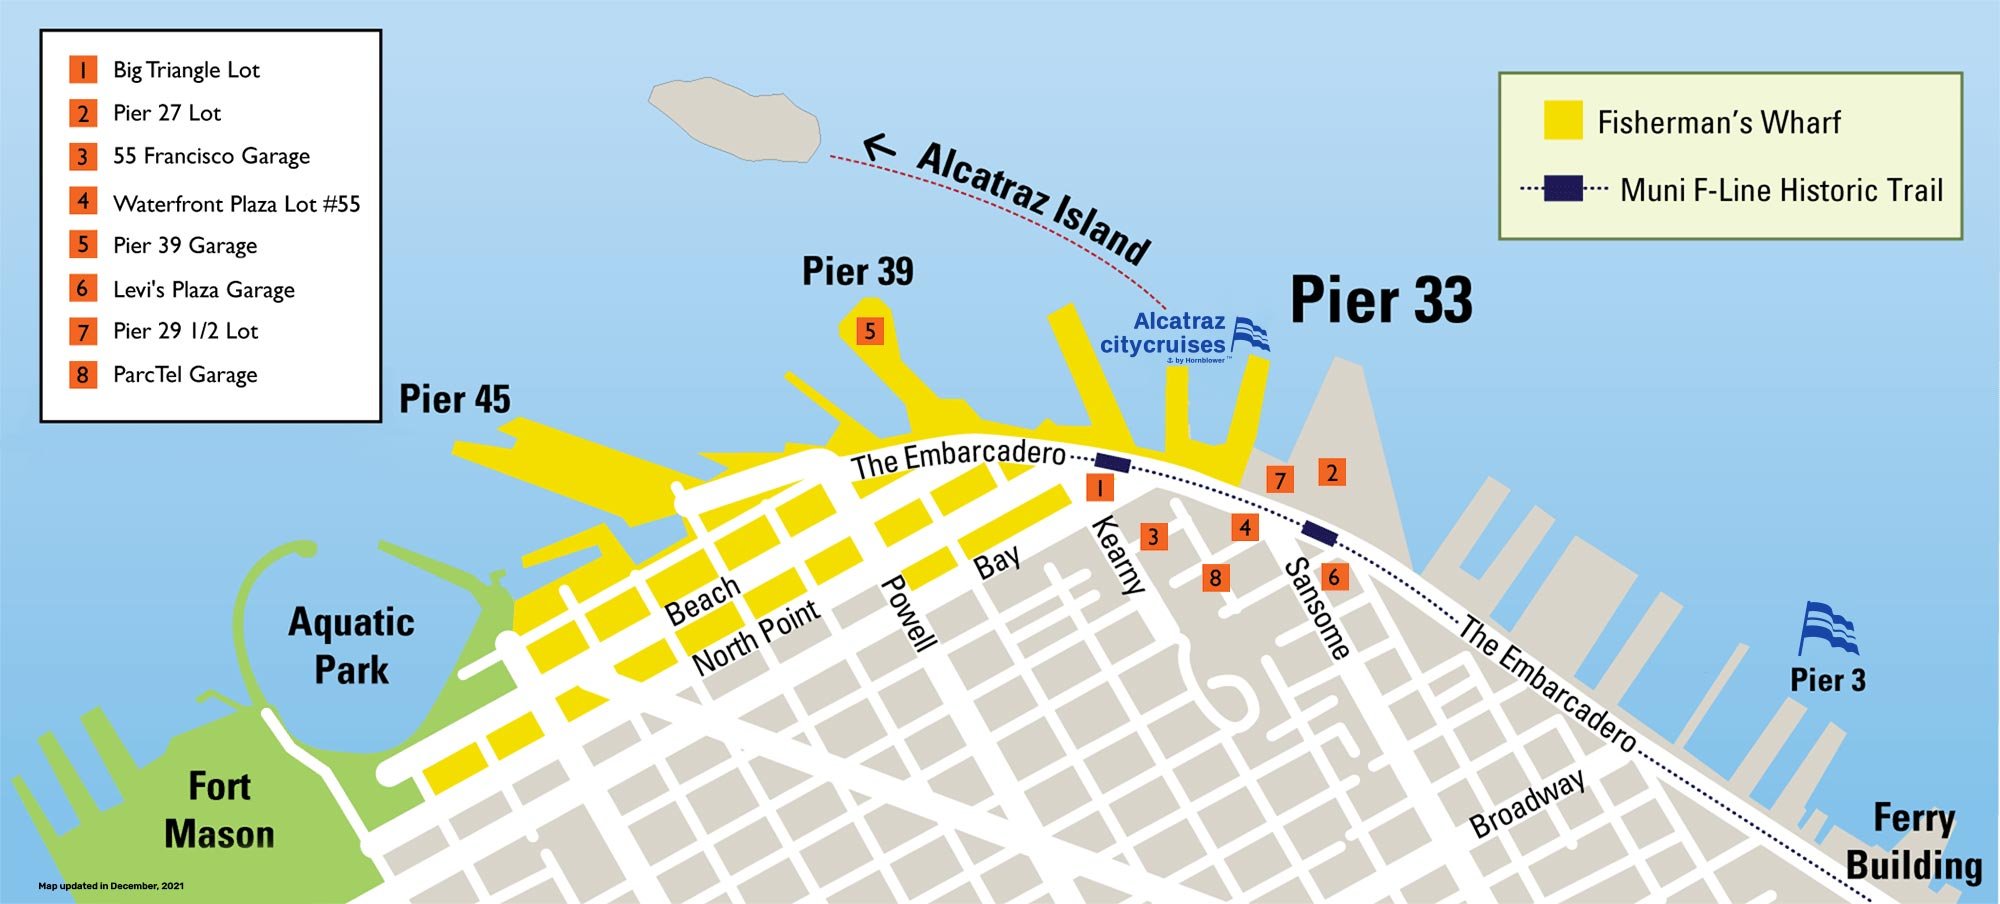 Alcatraz City Cruises parkering placering kort.